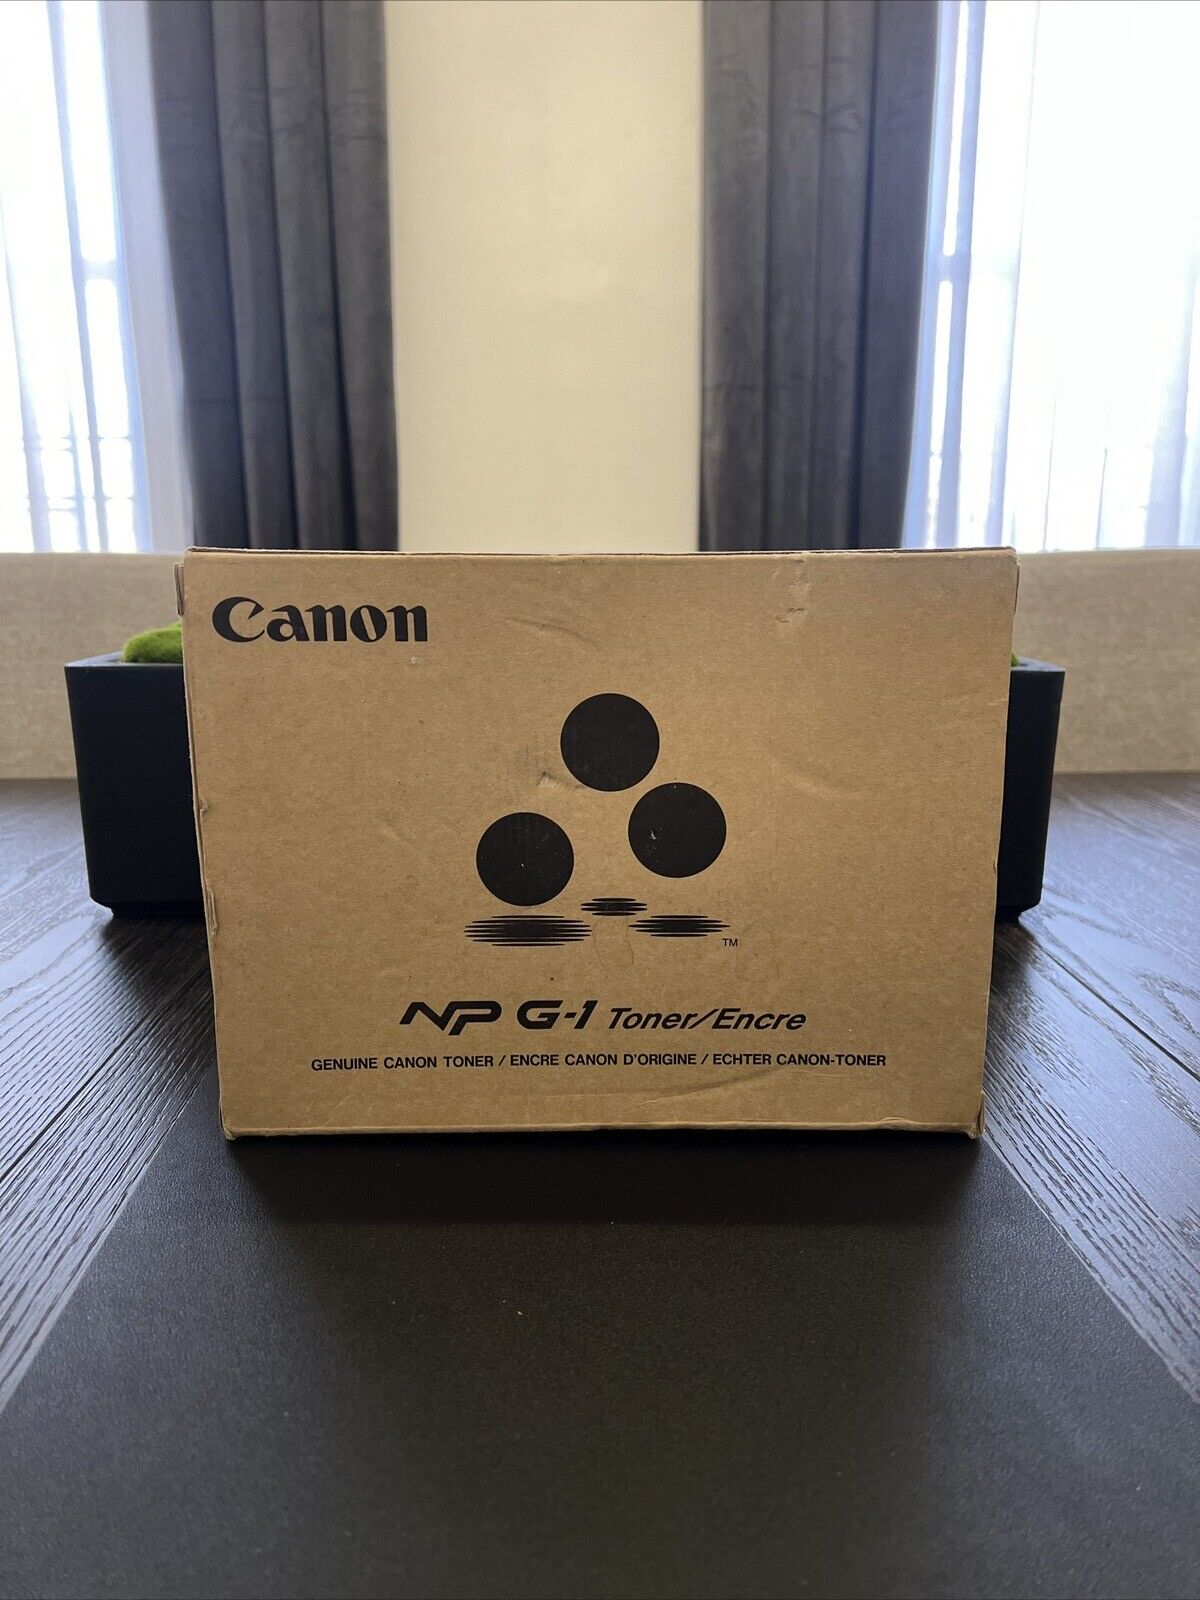 Canon NP G-1 Toner Box of 4 Cartridges NP1200, NP1520, NP1820, NP2020, NP2120